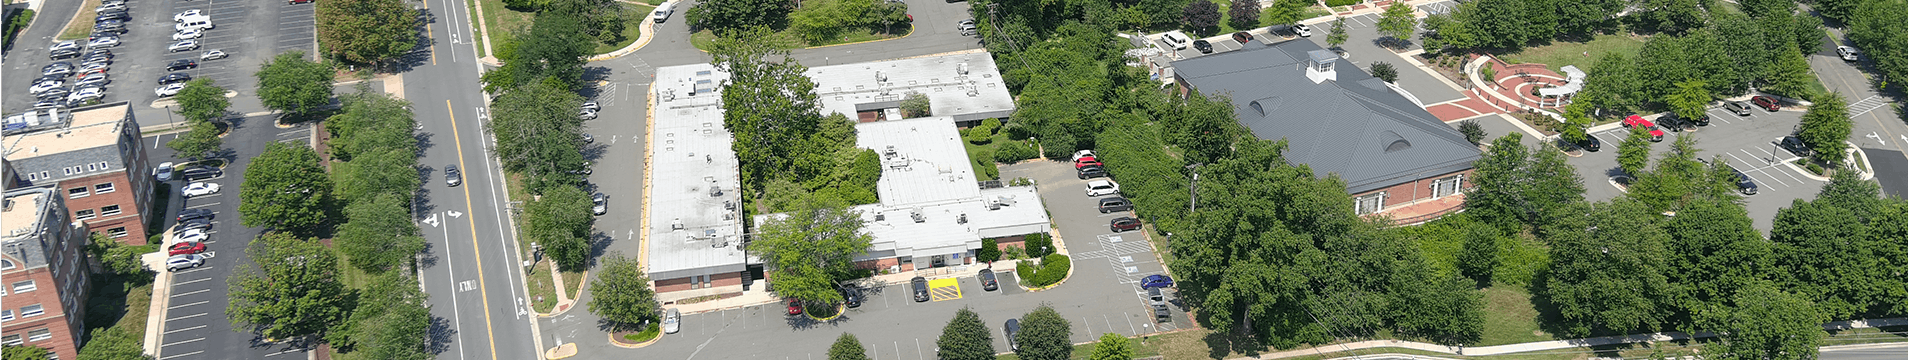 Willard-Sherwood Health & Community Center site